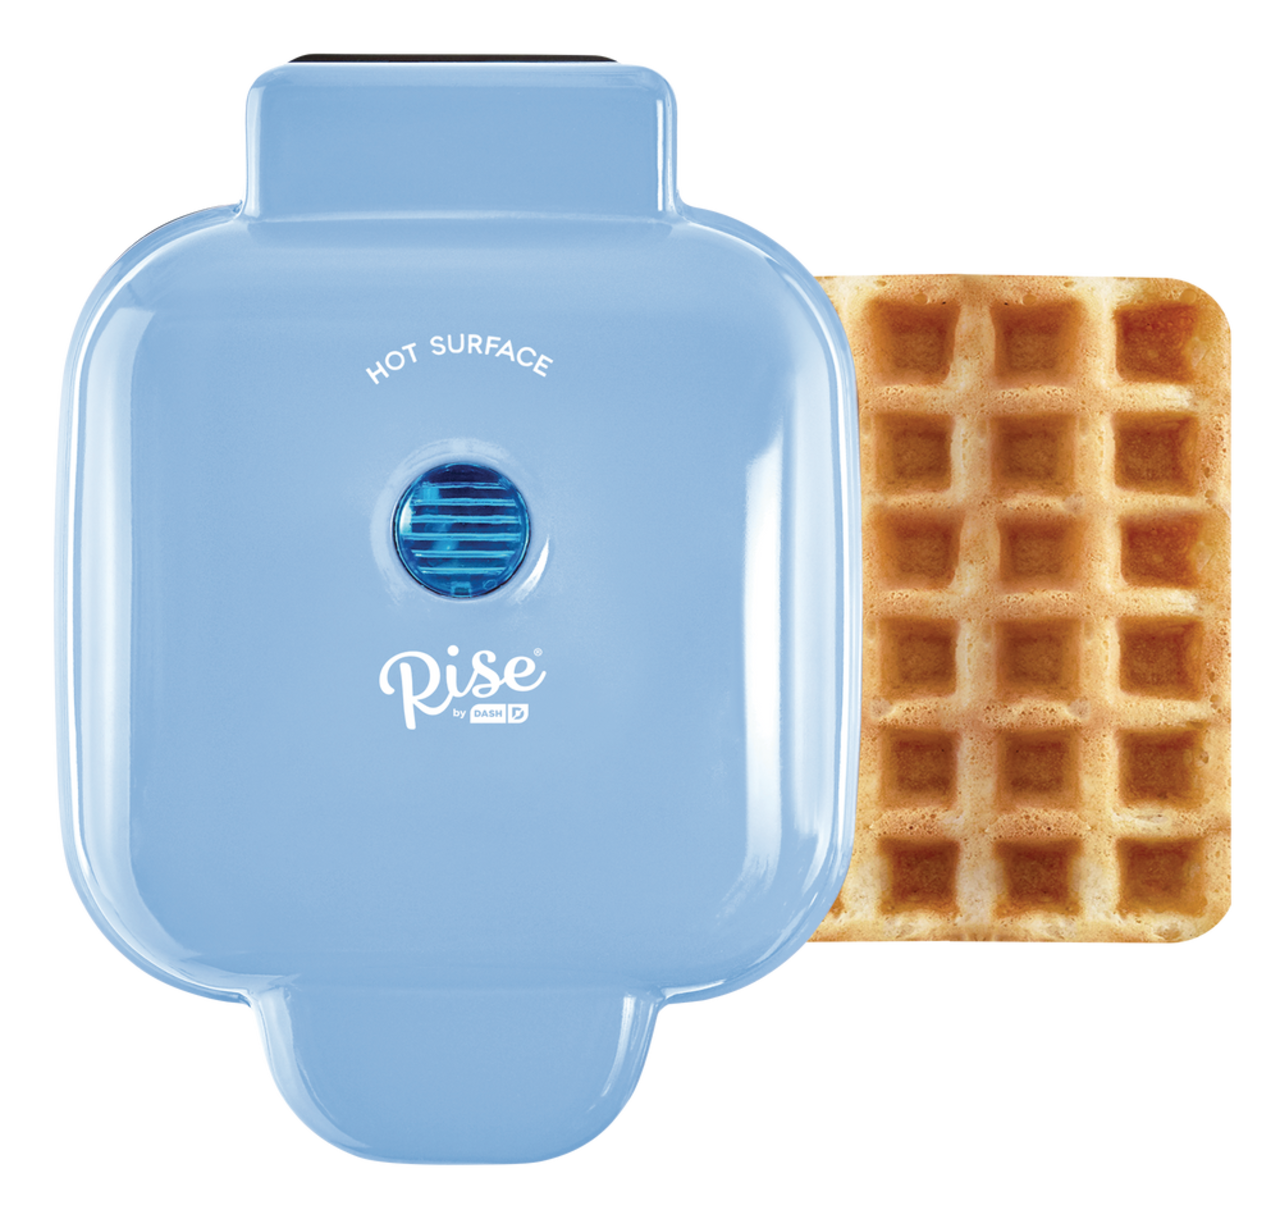 Rise by Dash Blue Mini Waffle Maker